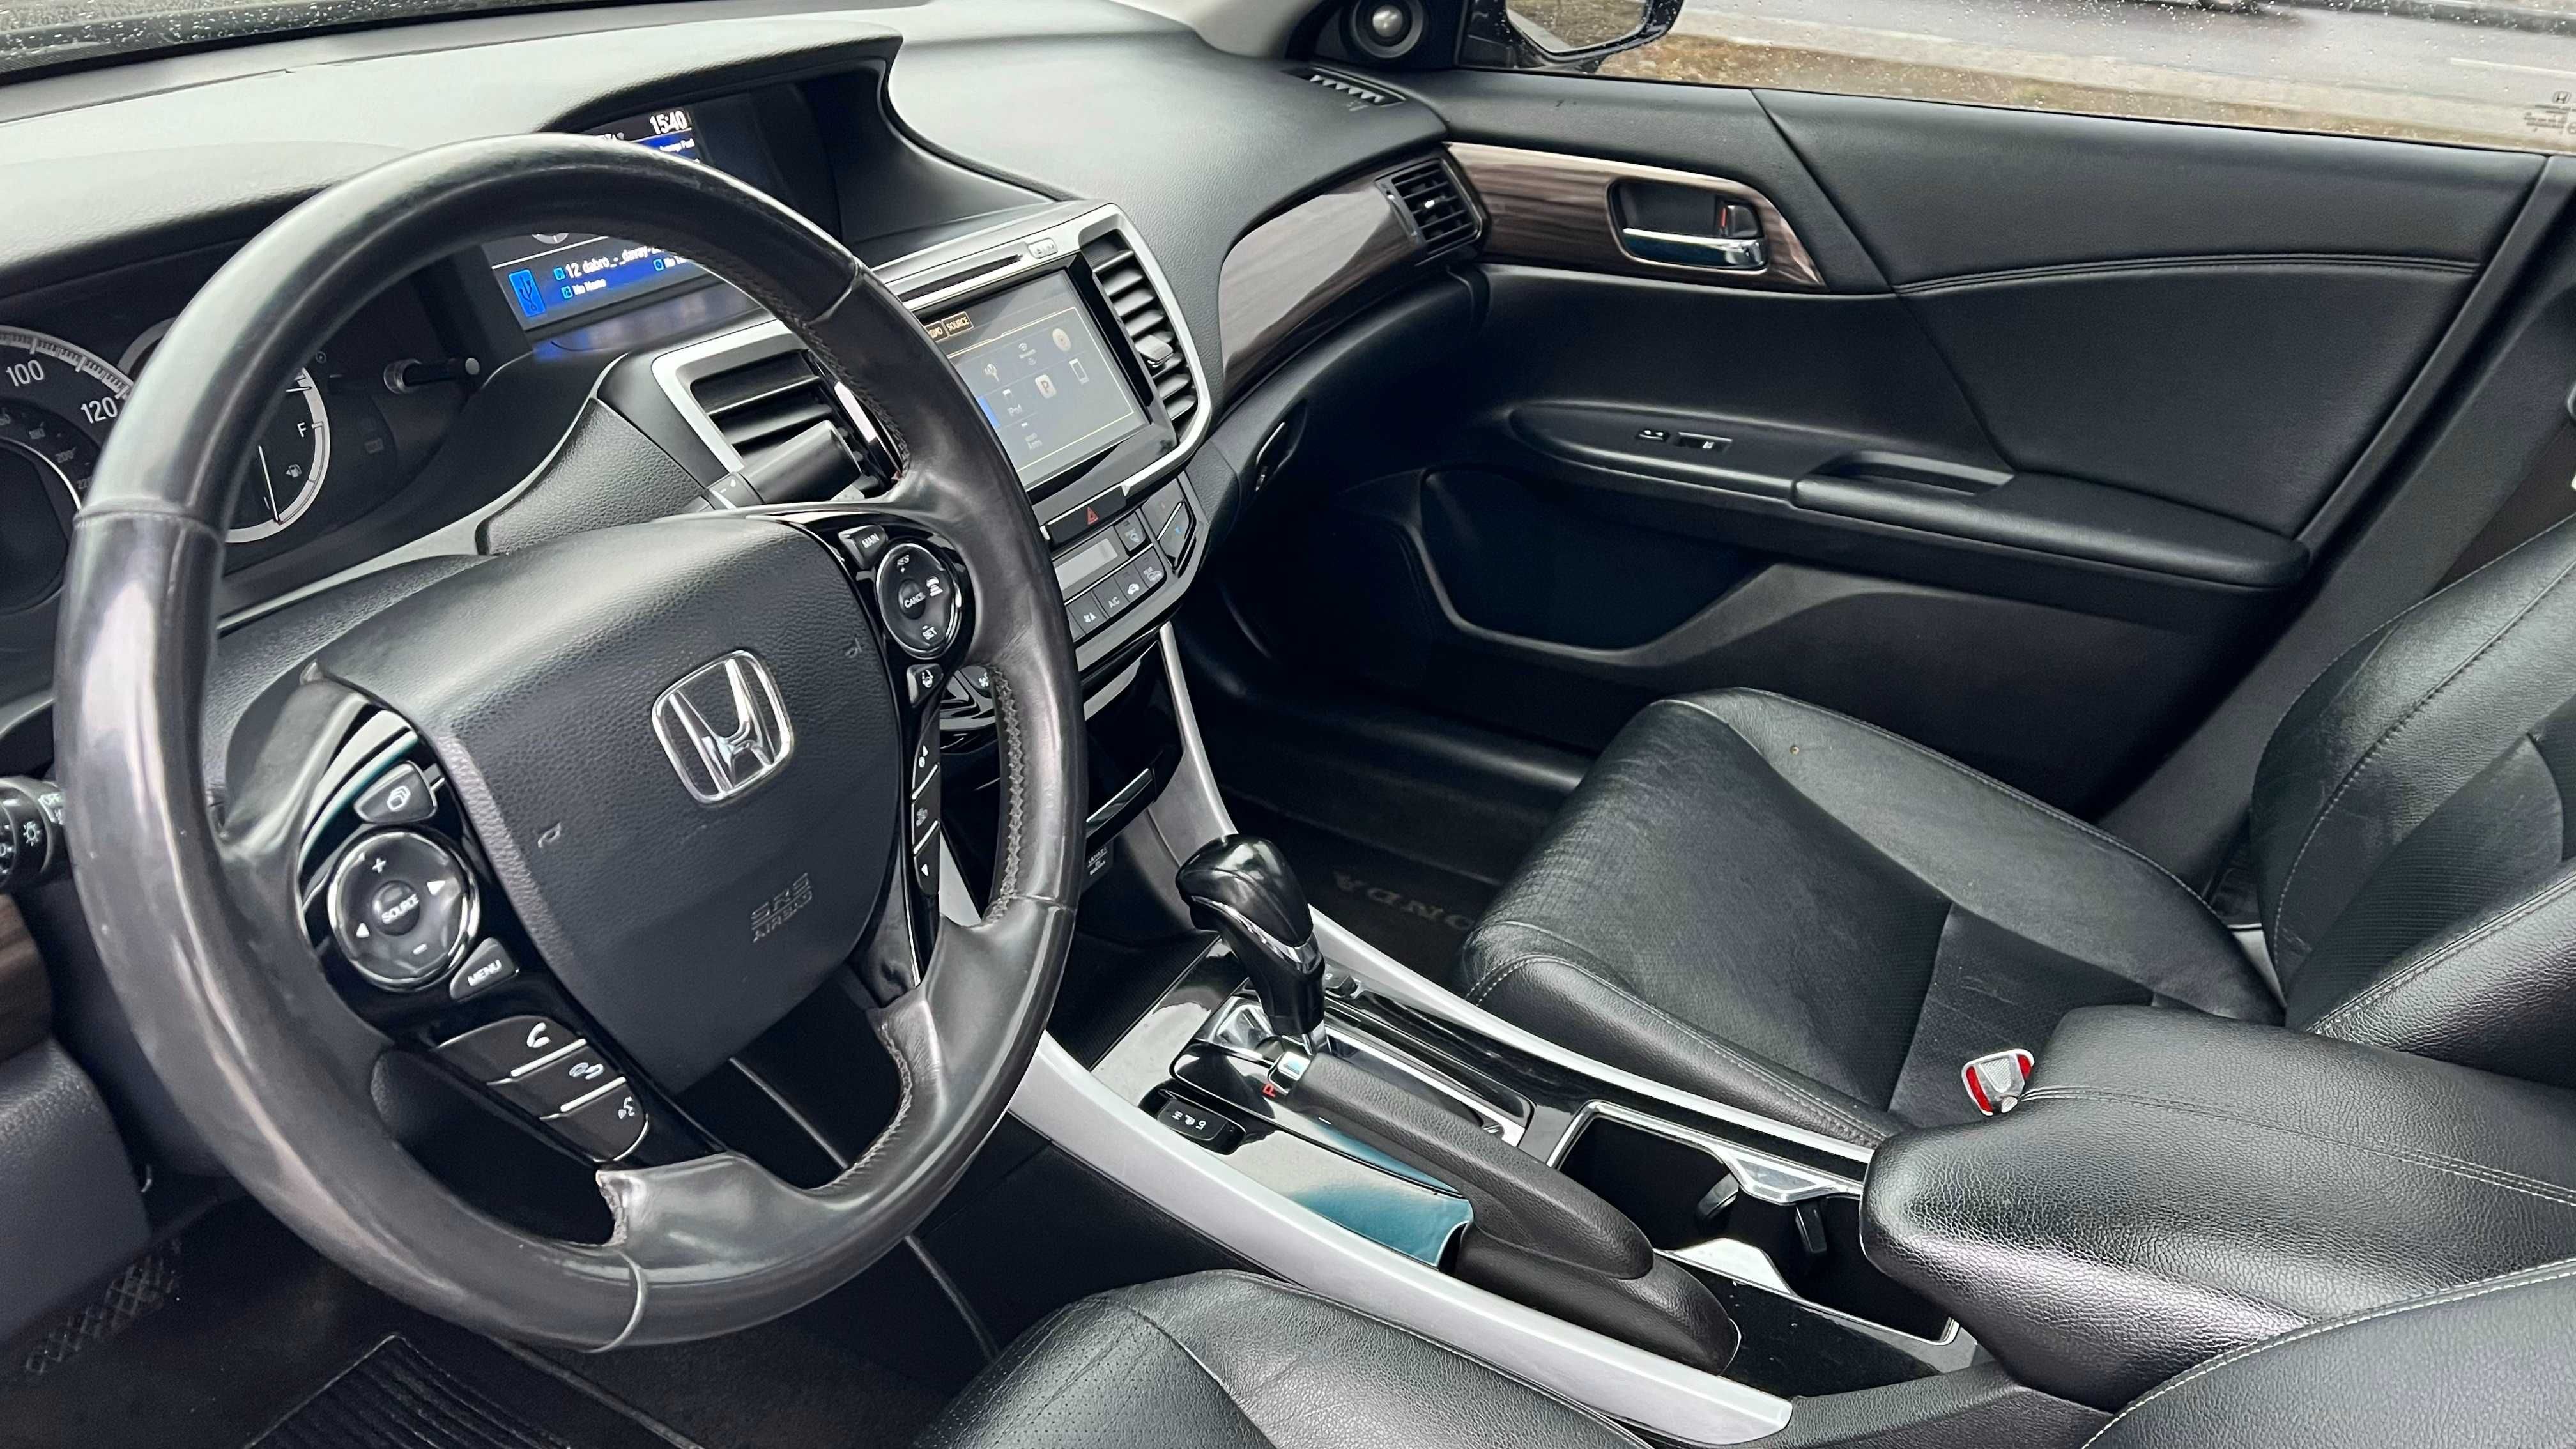 ПРОДАМ Honda Accord, хода акорд 9, EXL 2016, обʼєм 2,4 л. 188 k/c